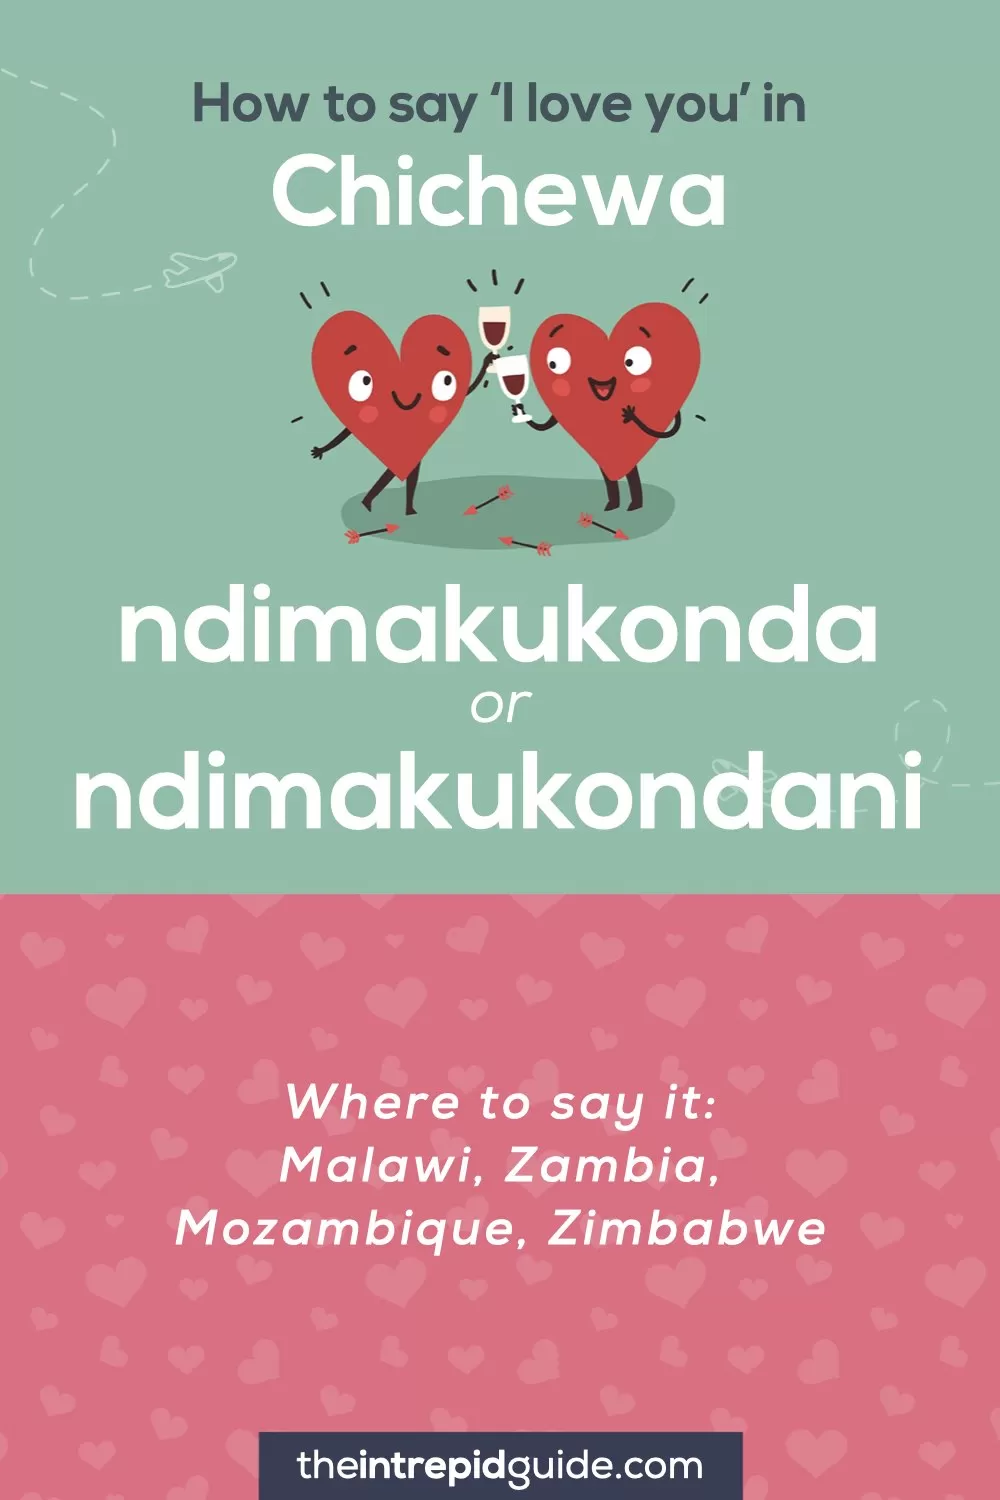 How to say I love you in different languages - Chichewa - ndimakukonda, ndimakukondani